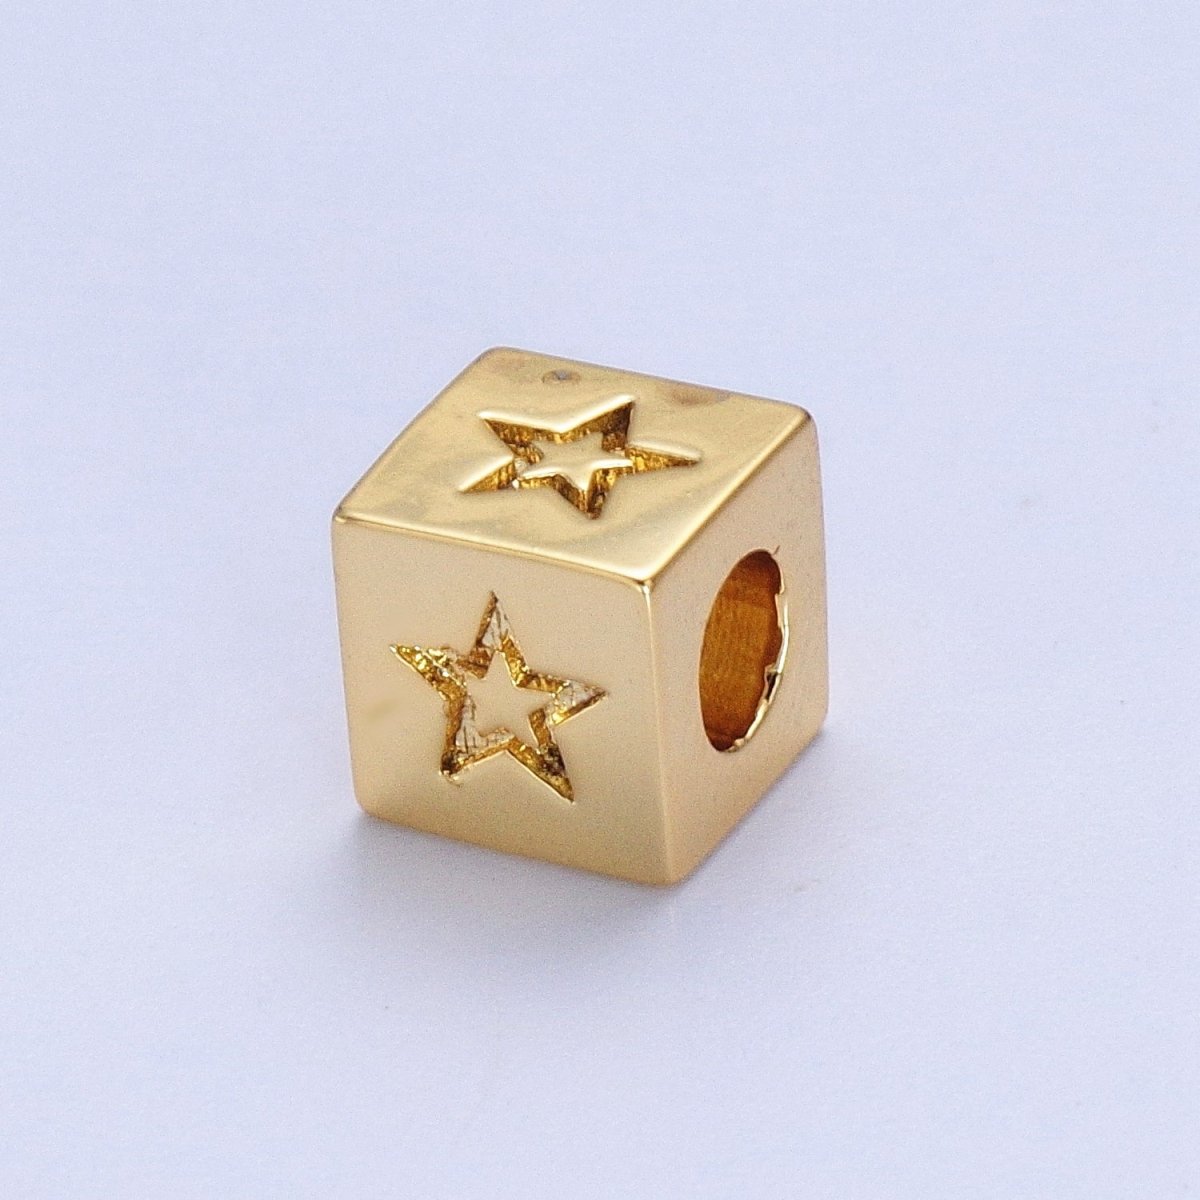 Star, Heart, Moon Engraved 6mm Cube Block Bead in Gold & Silver | B-676 B-682 B-688 B-780 B-859 B-860 - DLUXCA